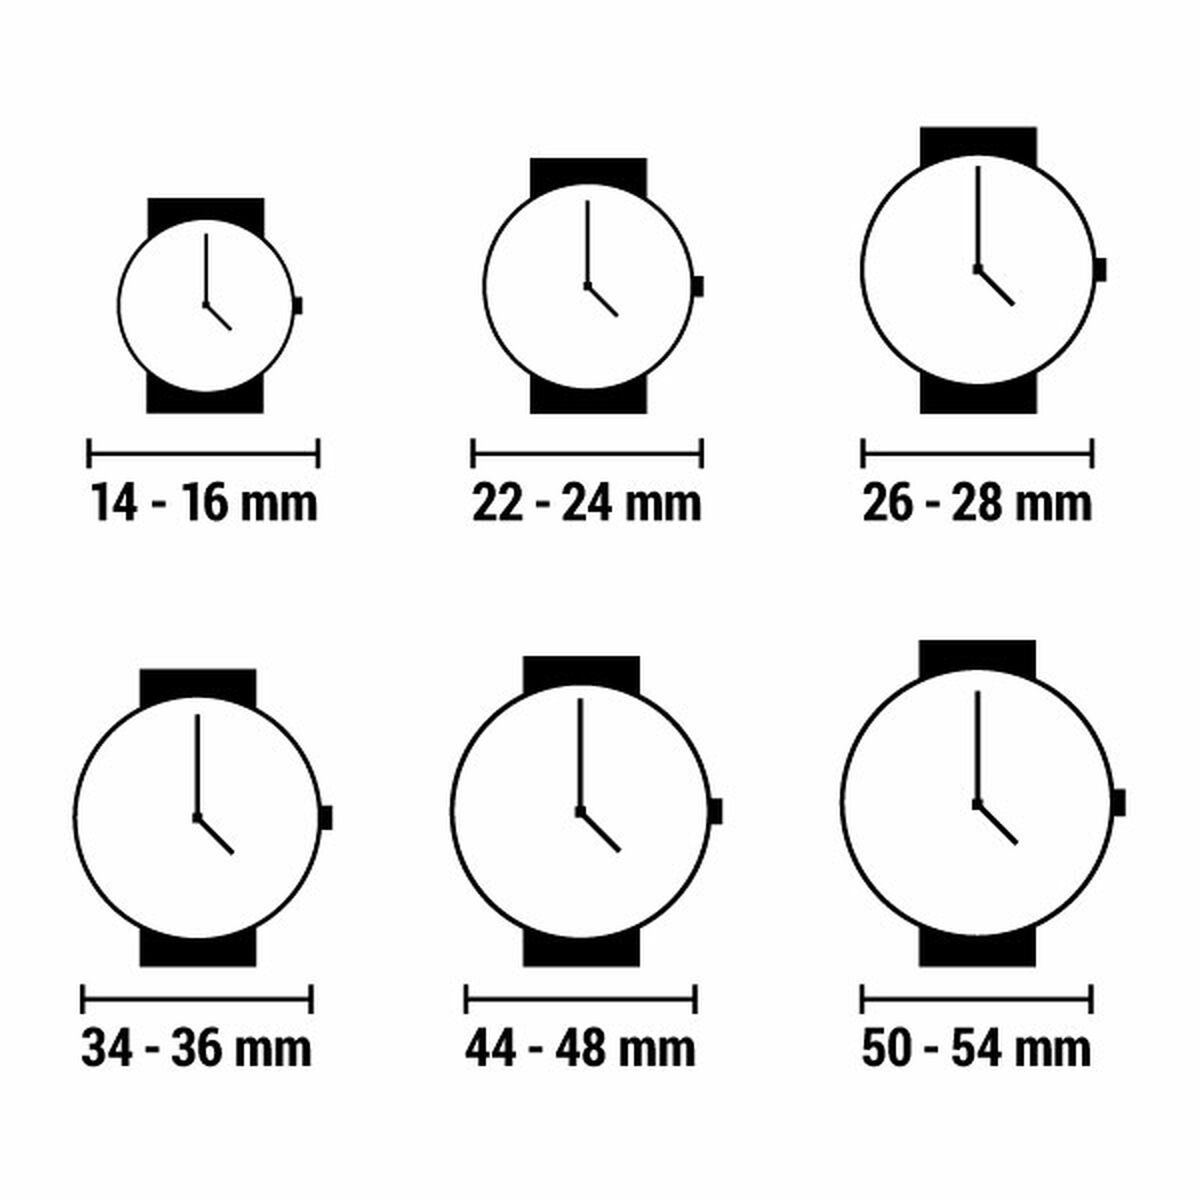 Horloge Dames Breil TW1777 (Ø 35 mm)